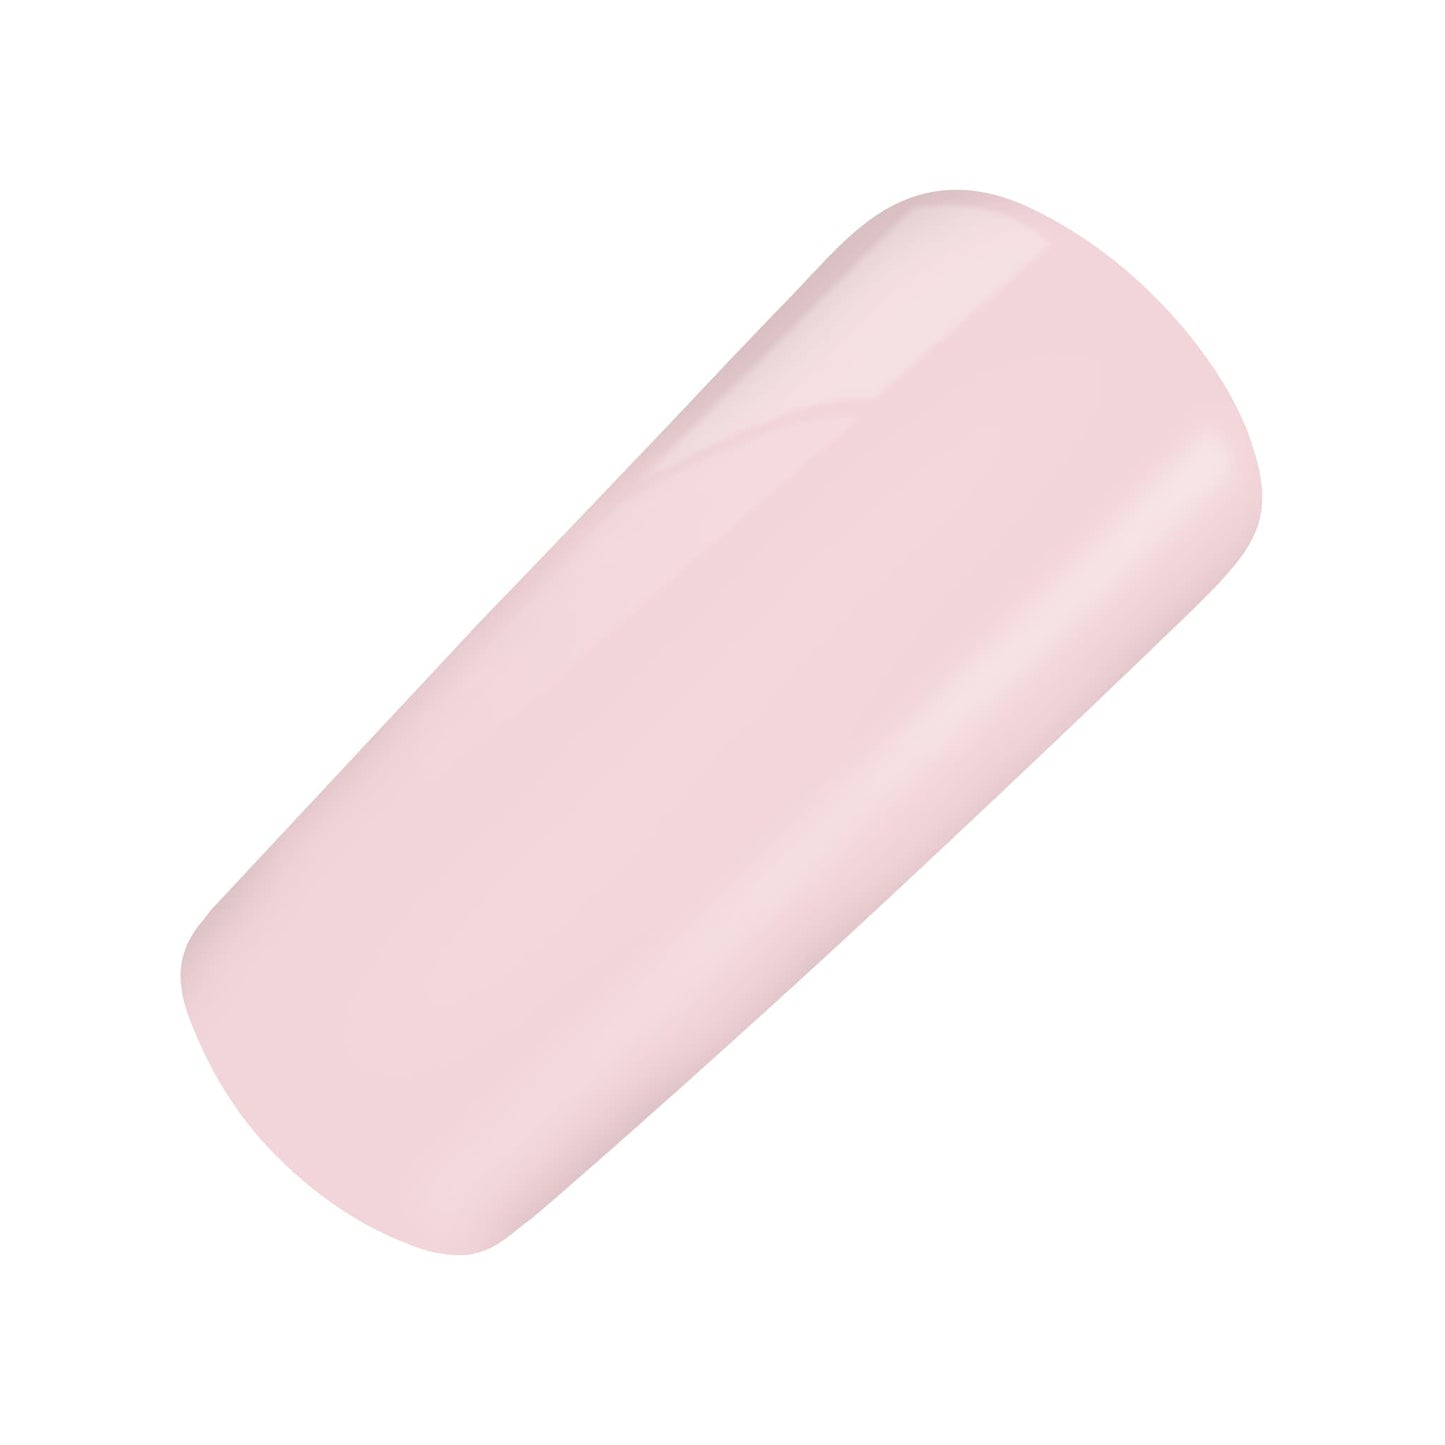 UV Nagellack Classic powder pink